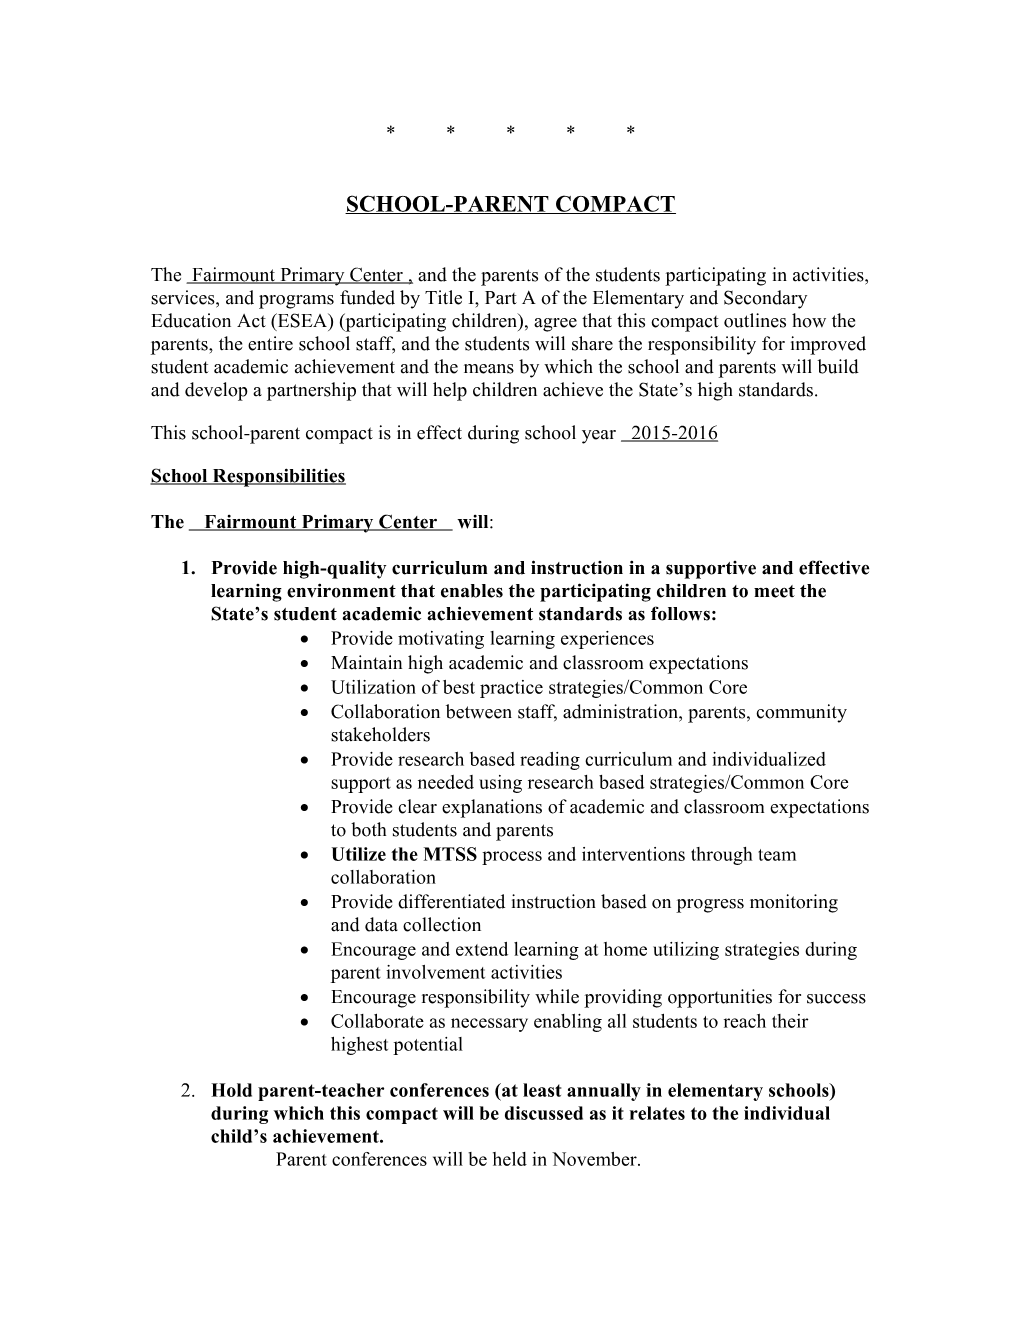 Appendix E: School-Parent Compact